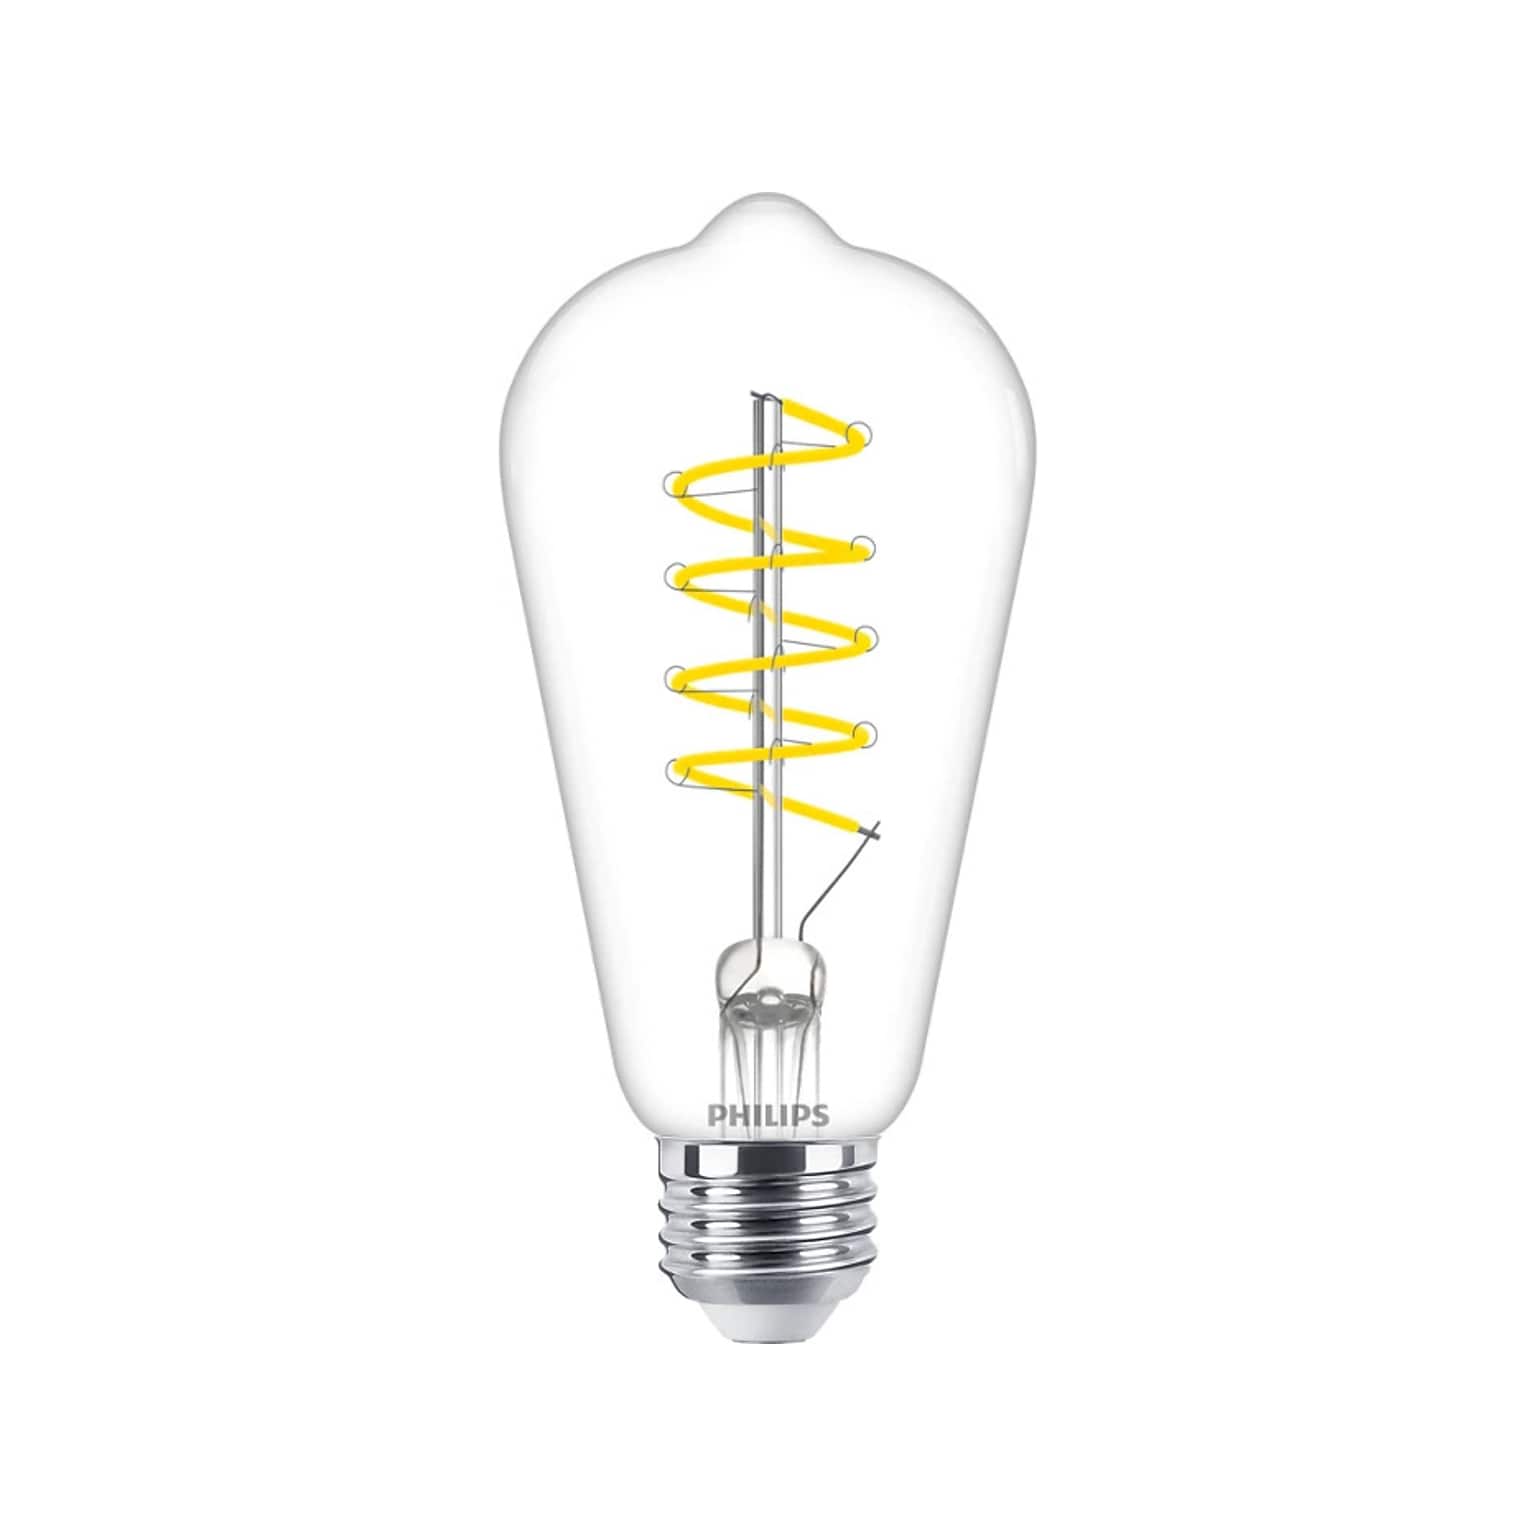 Philips Designer Deco 5.5-Watt Daylight LED Decorative Bulb, 4/Carton (565812)